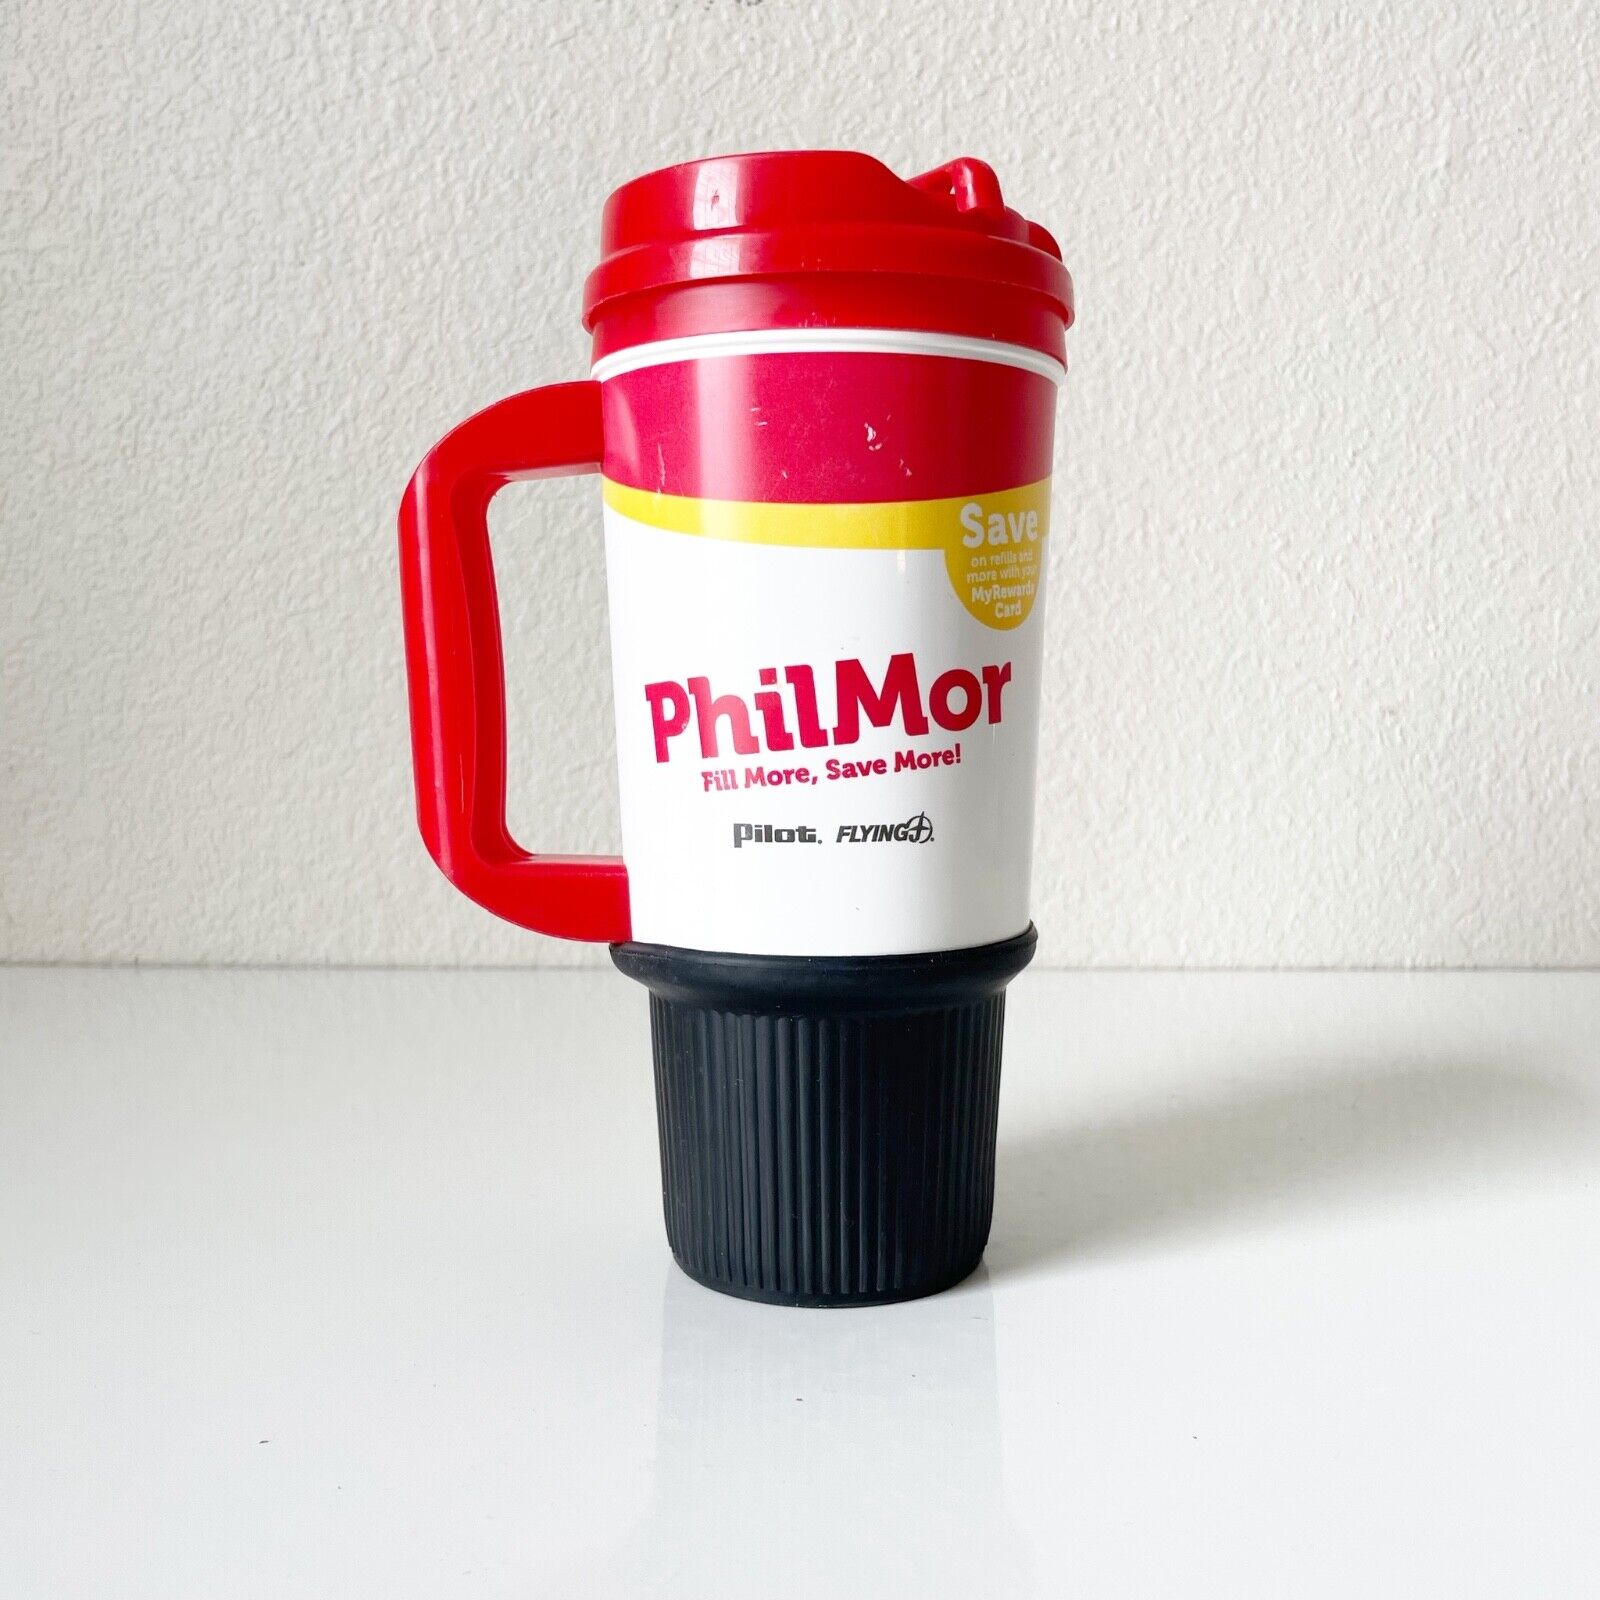 Philmor Insulated Coffee Mug 24 oz Pilot Flying J Save $ on Refills Plastic Cup